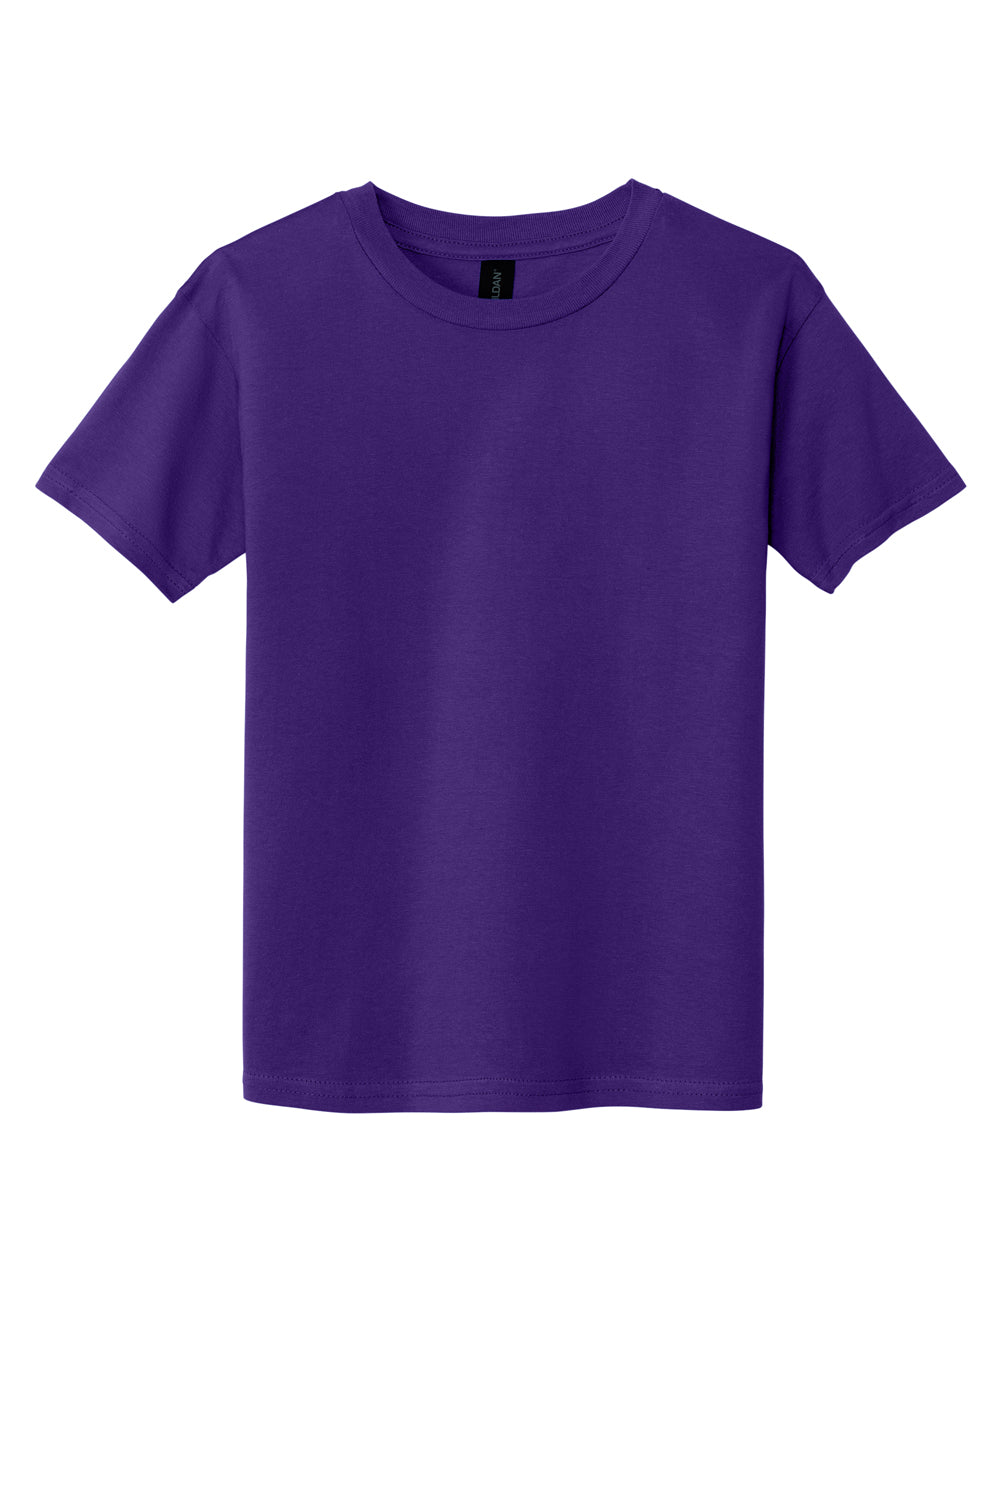 Gildan Youth Softstyle Short Sleeve Crewneck T-Shirt Purple Flat Front